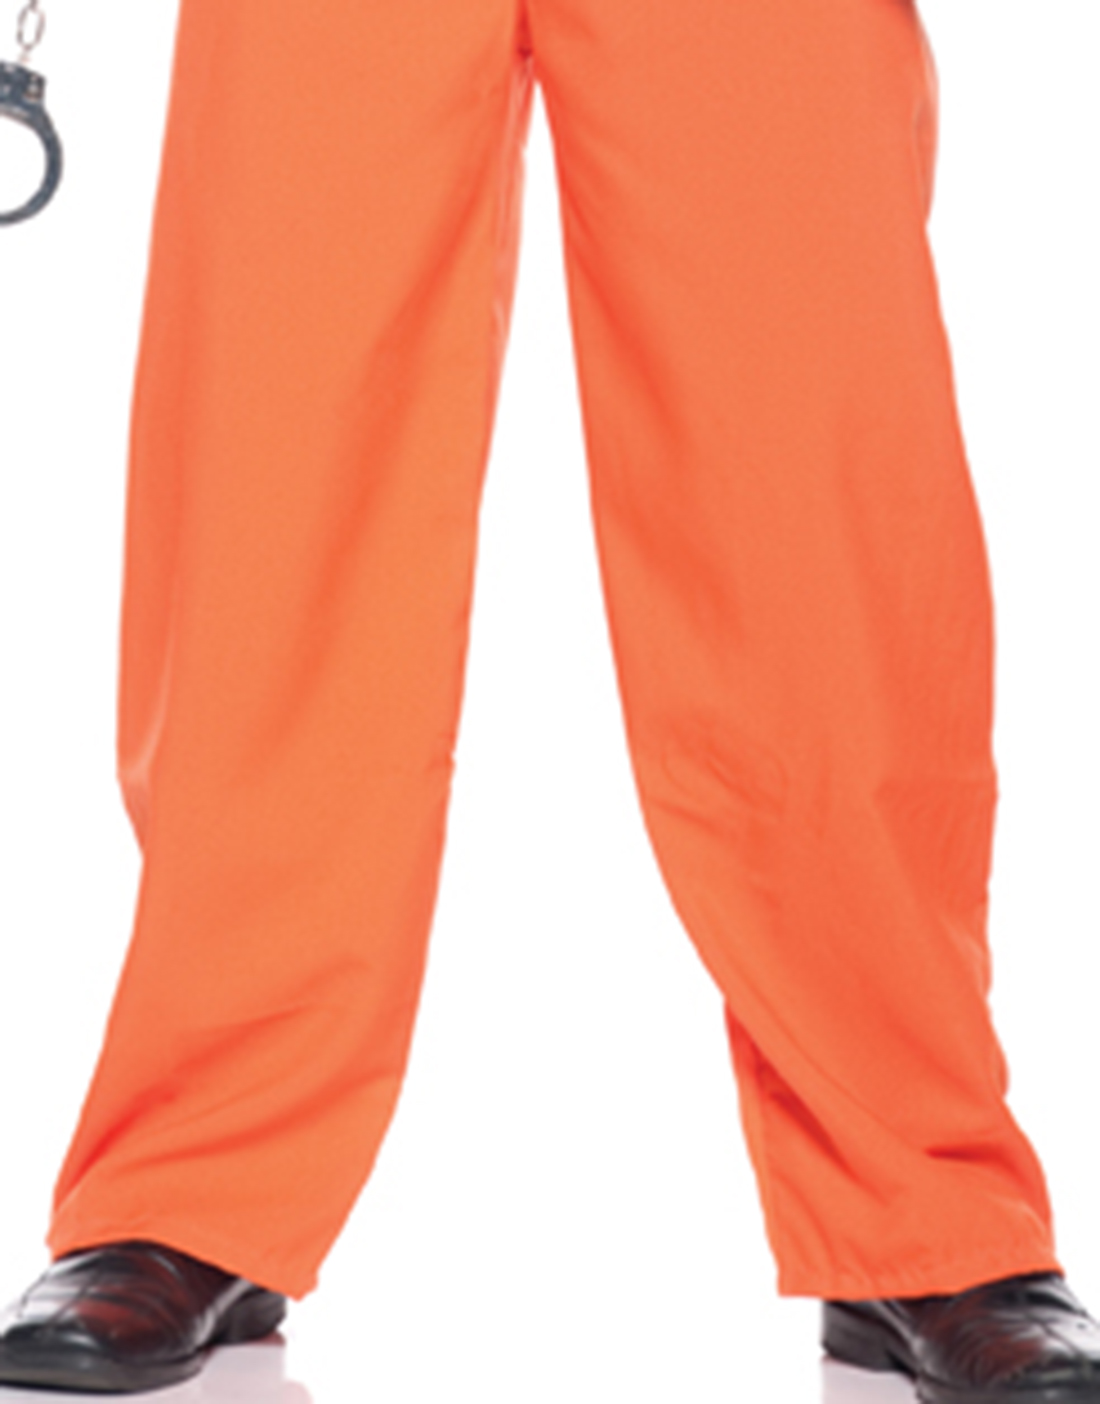 Underwraps Adult Orange Jumpsuit Costume - One Size - image 4 of 4